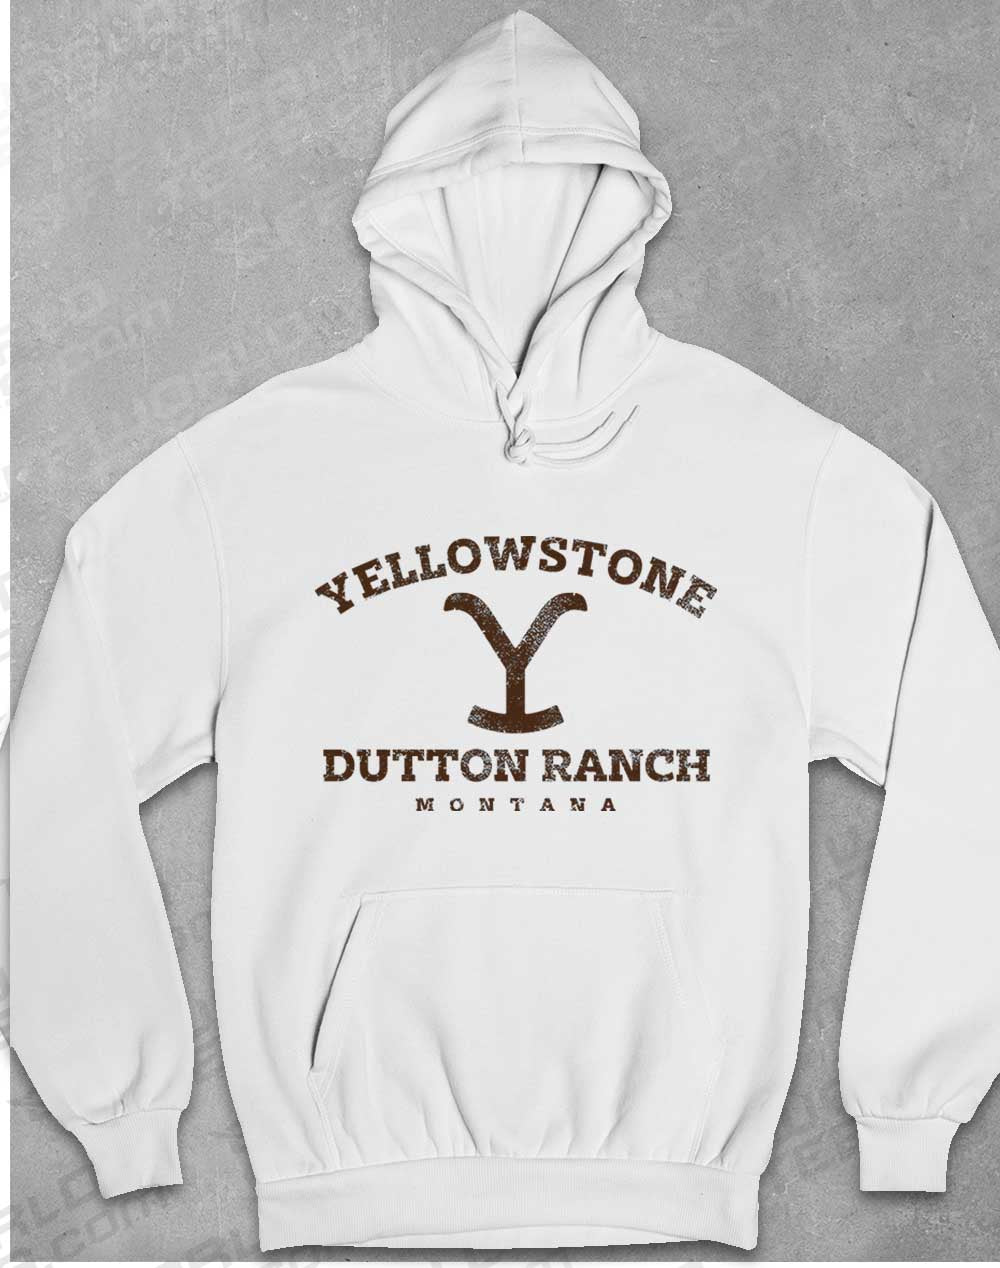 Arctic White - Dutton Ranch Montana Hoodie